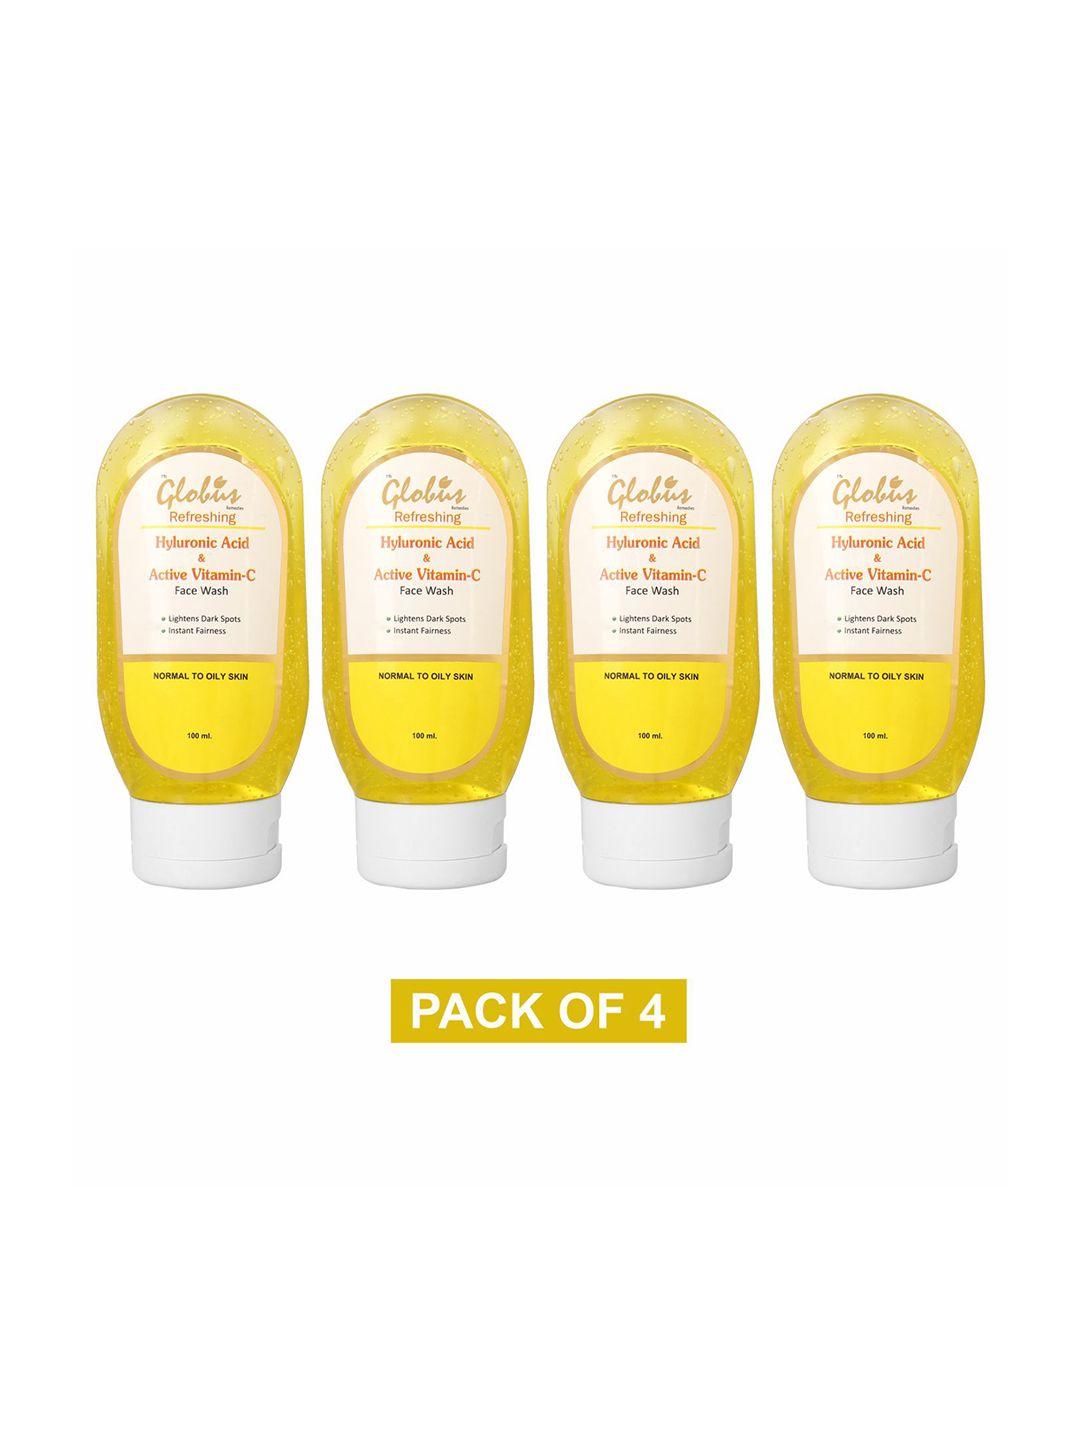 globus remedies set of 4 hyaluronic acid & vitamin c anti-aging face wash - 100ml each